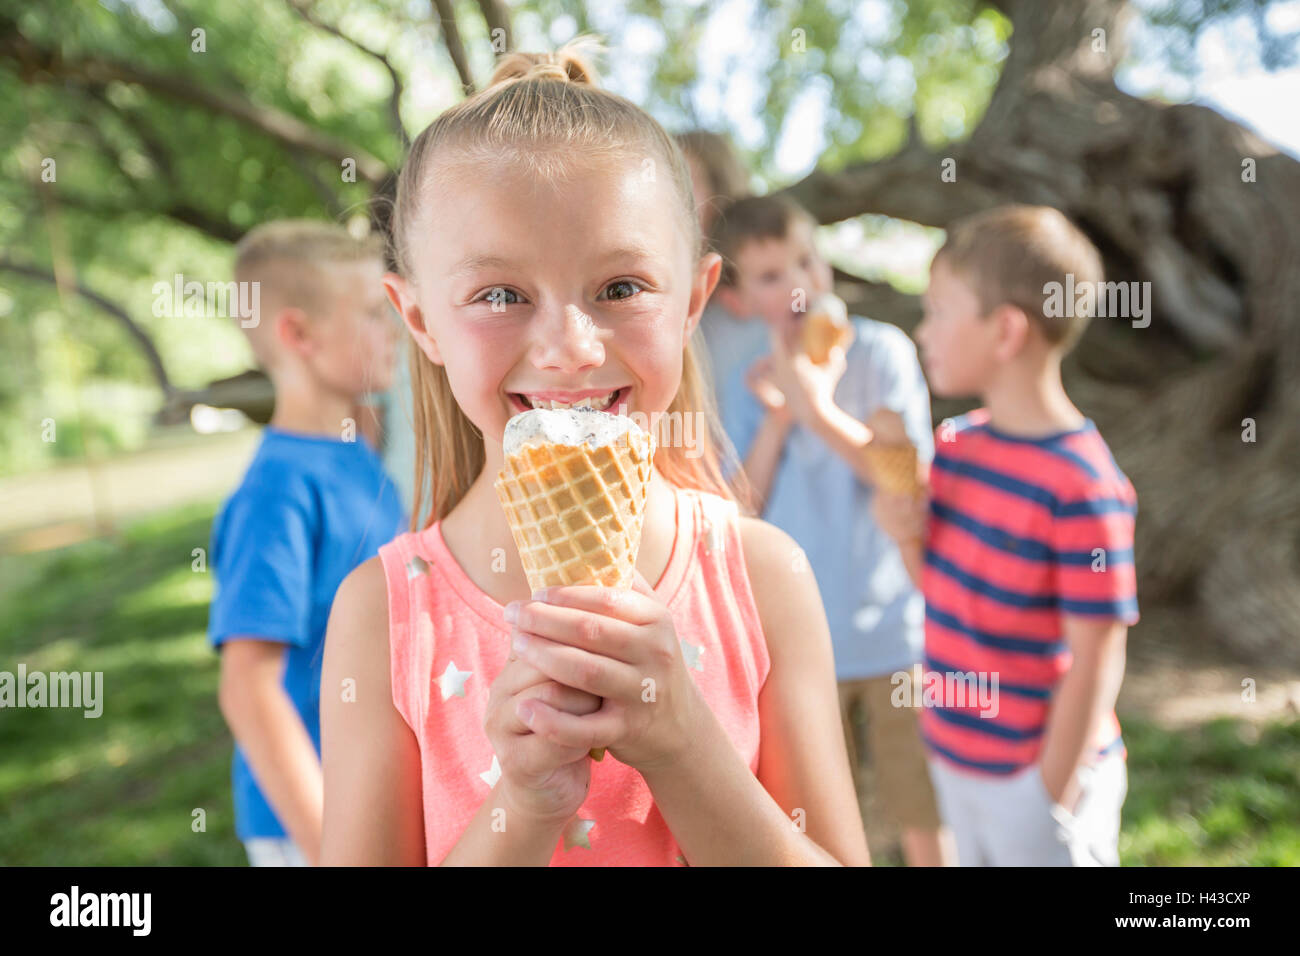 Caucasian girl eating ice cream cone Stock Photo